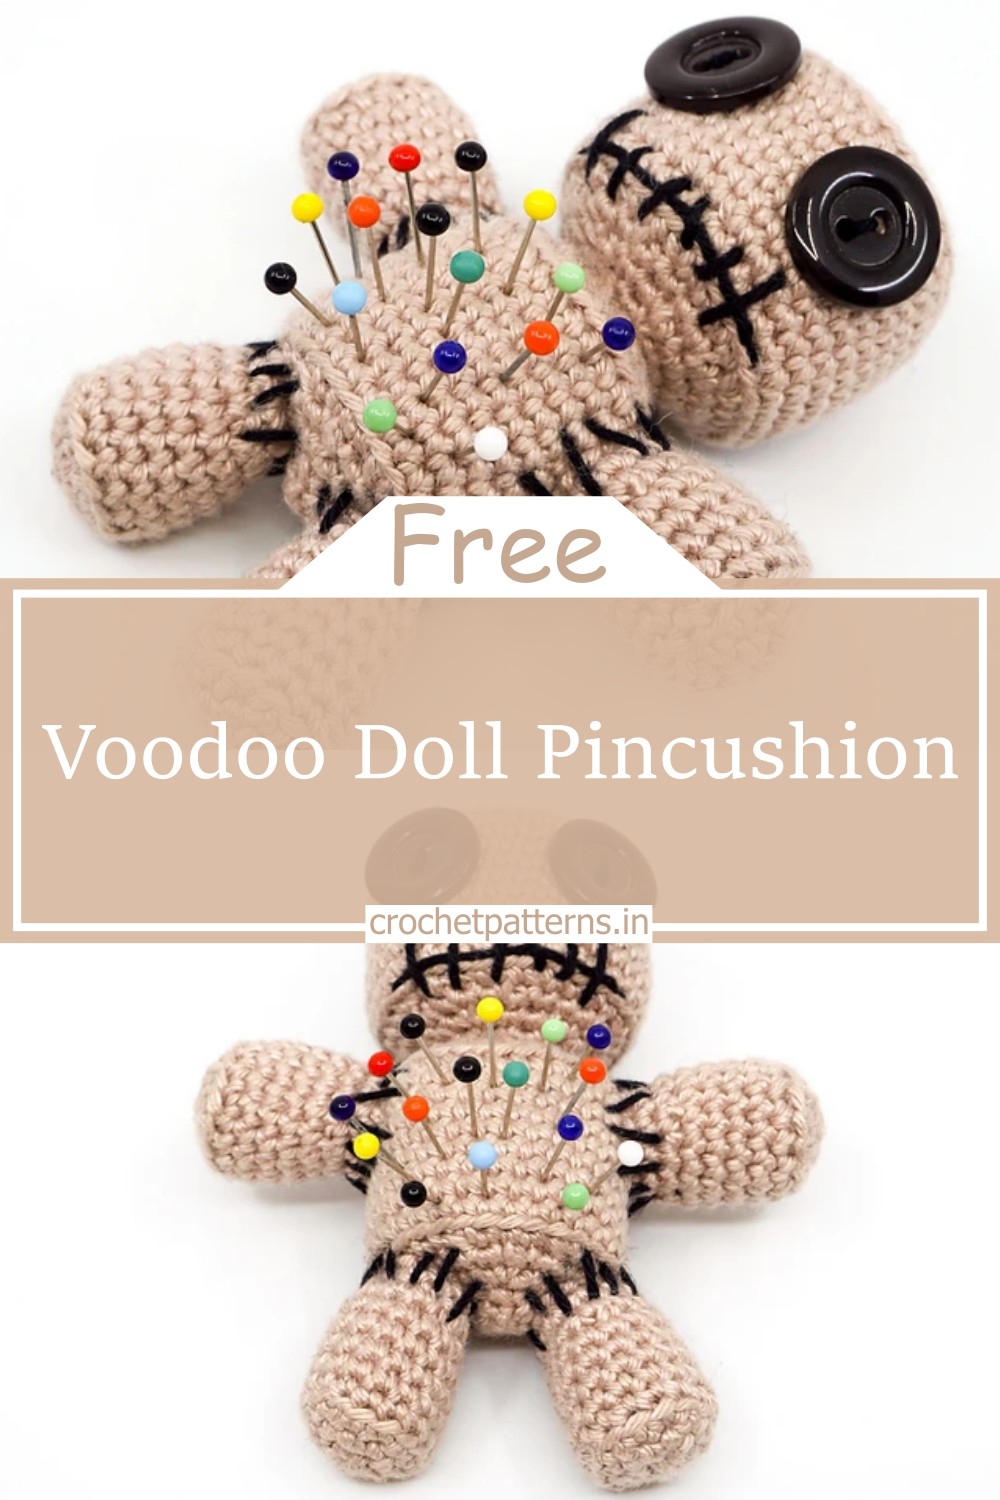 Voodoo Doll Pincushion